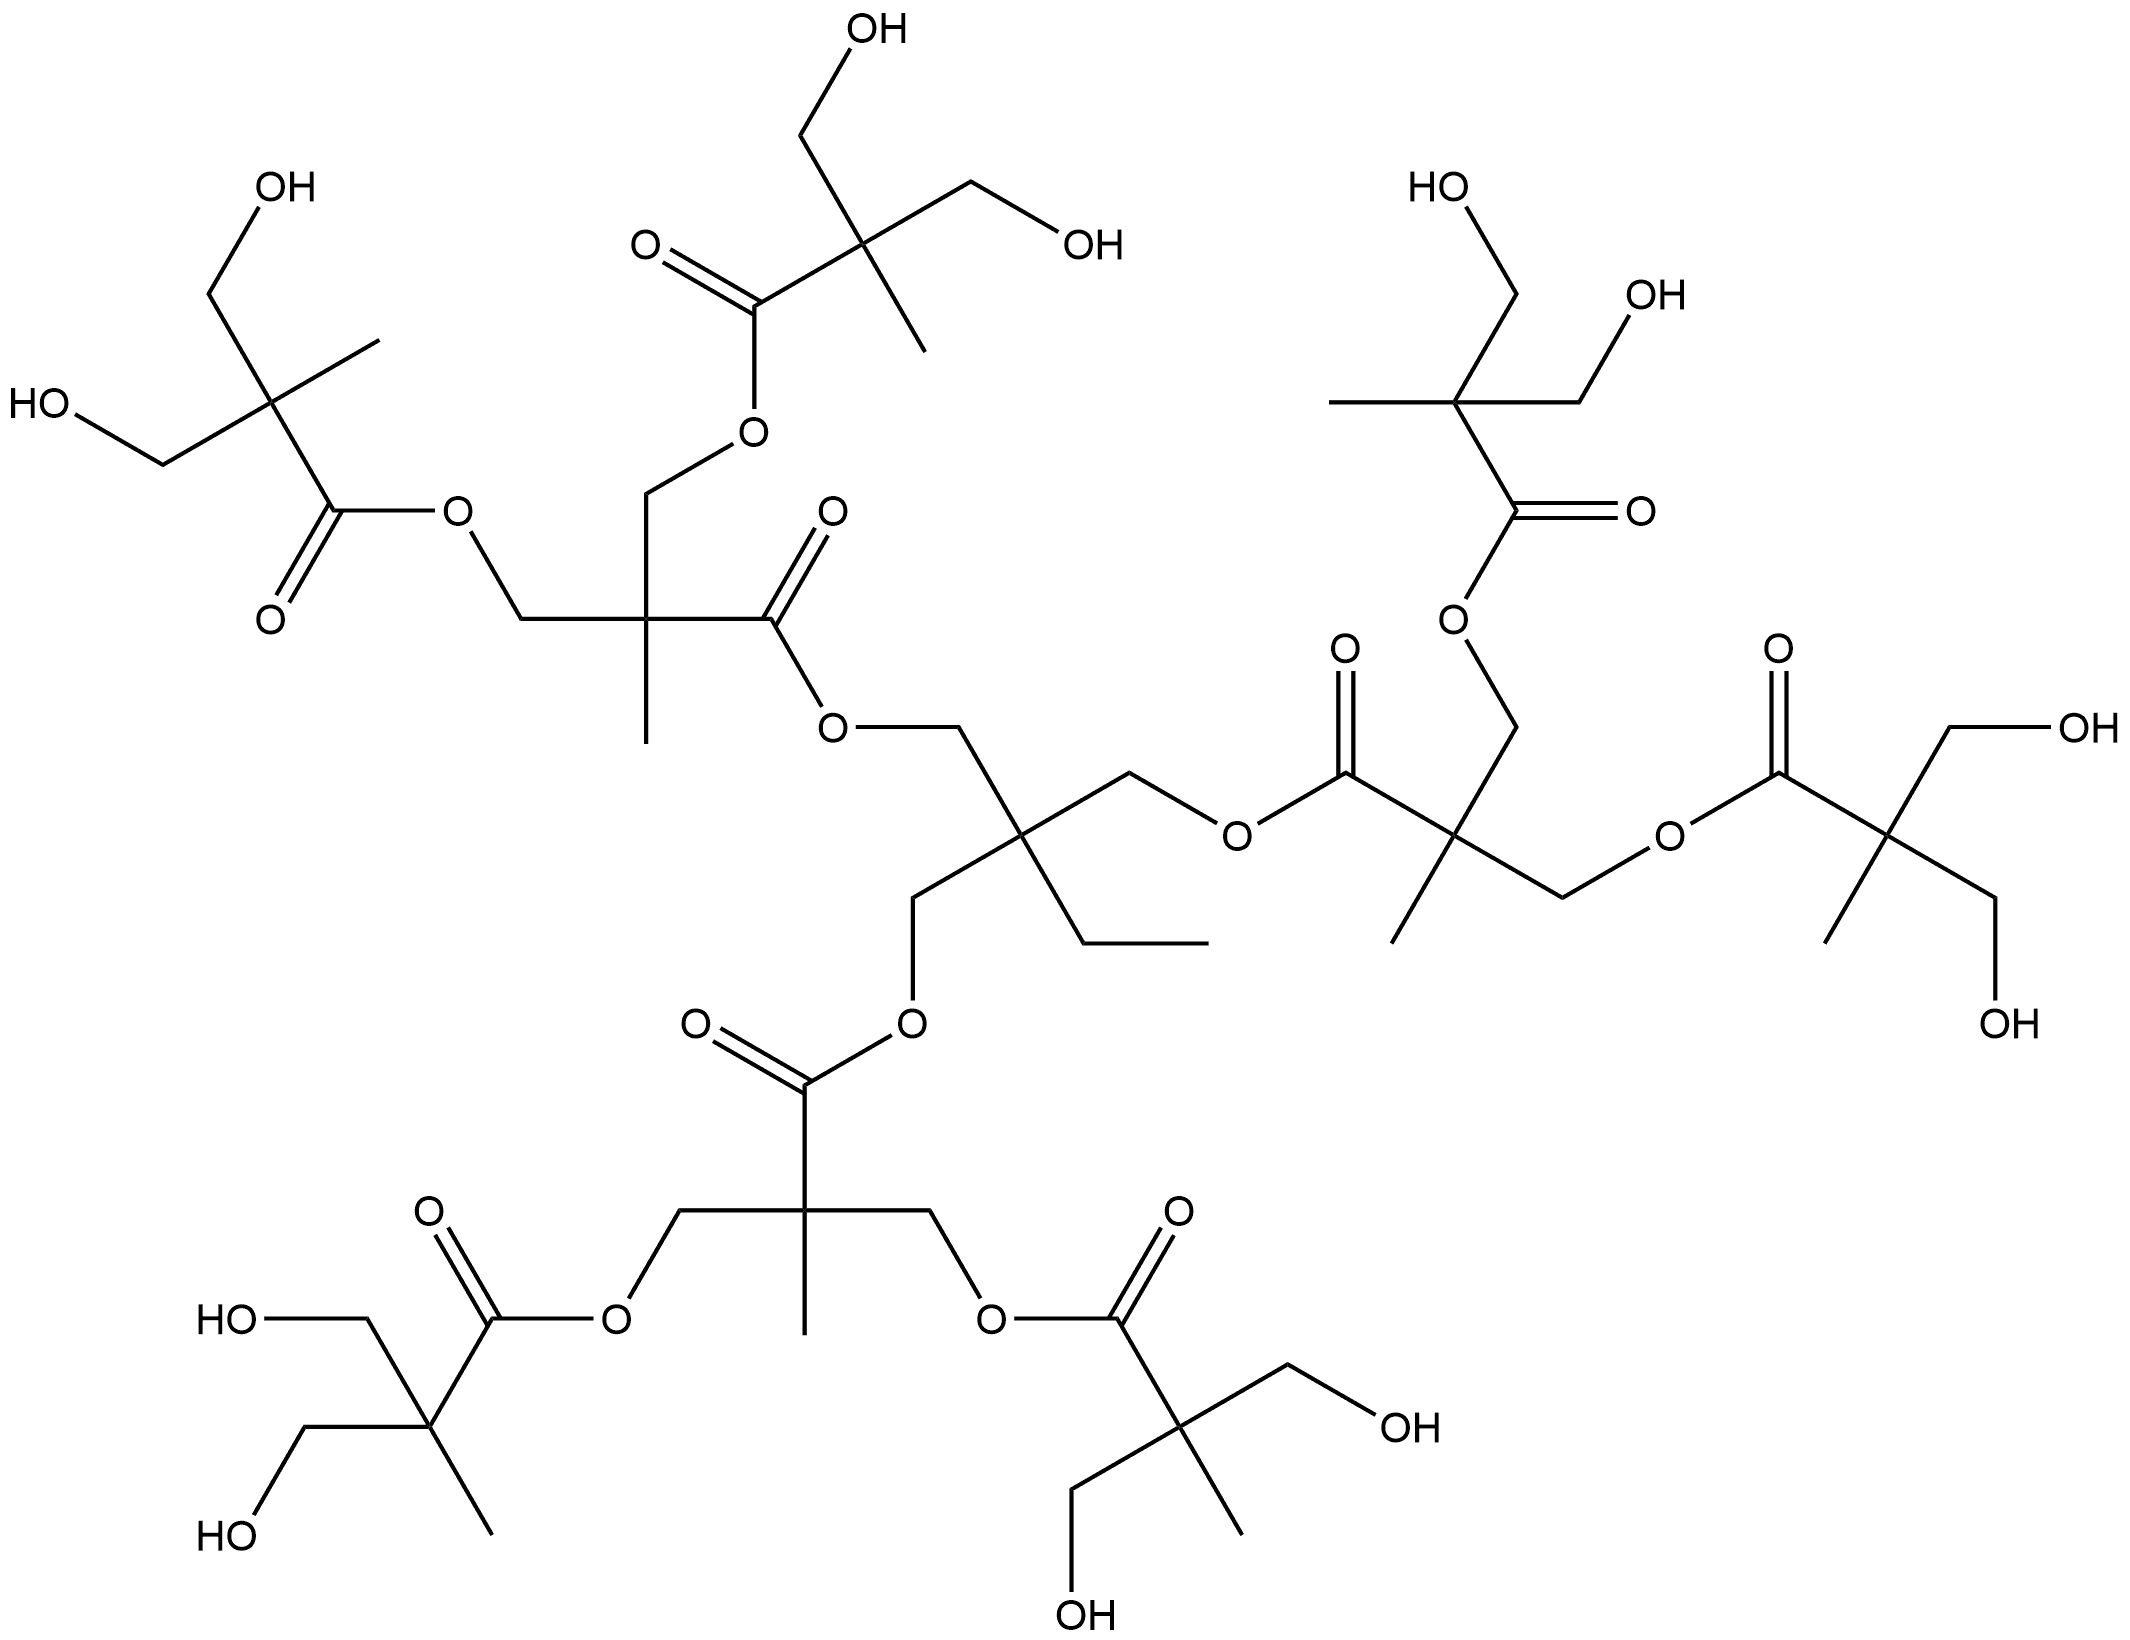 bis-MPA-OH dendrimer trimethylol propane core, generation 2 Structure